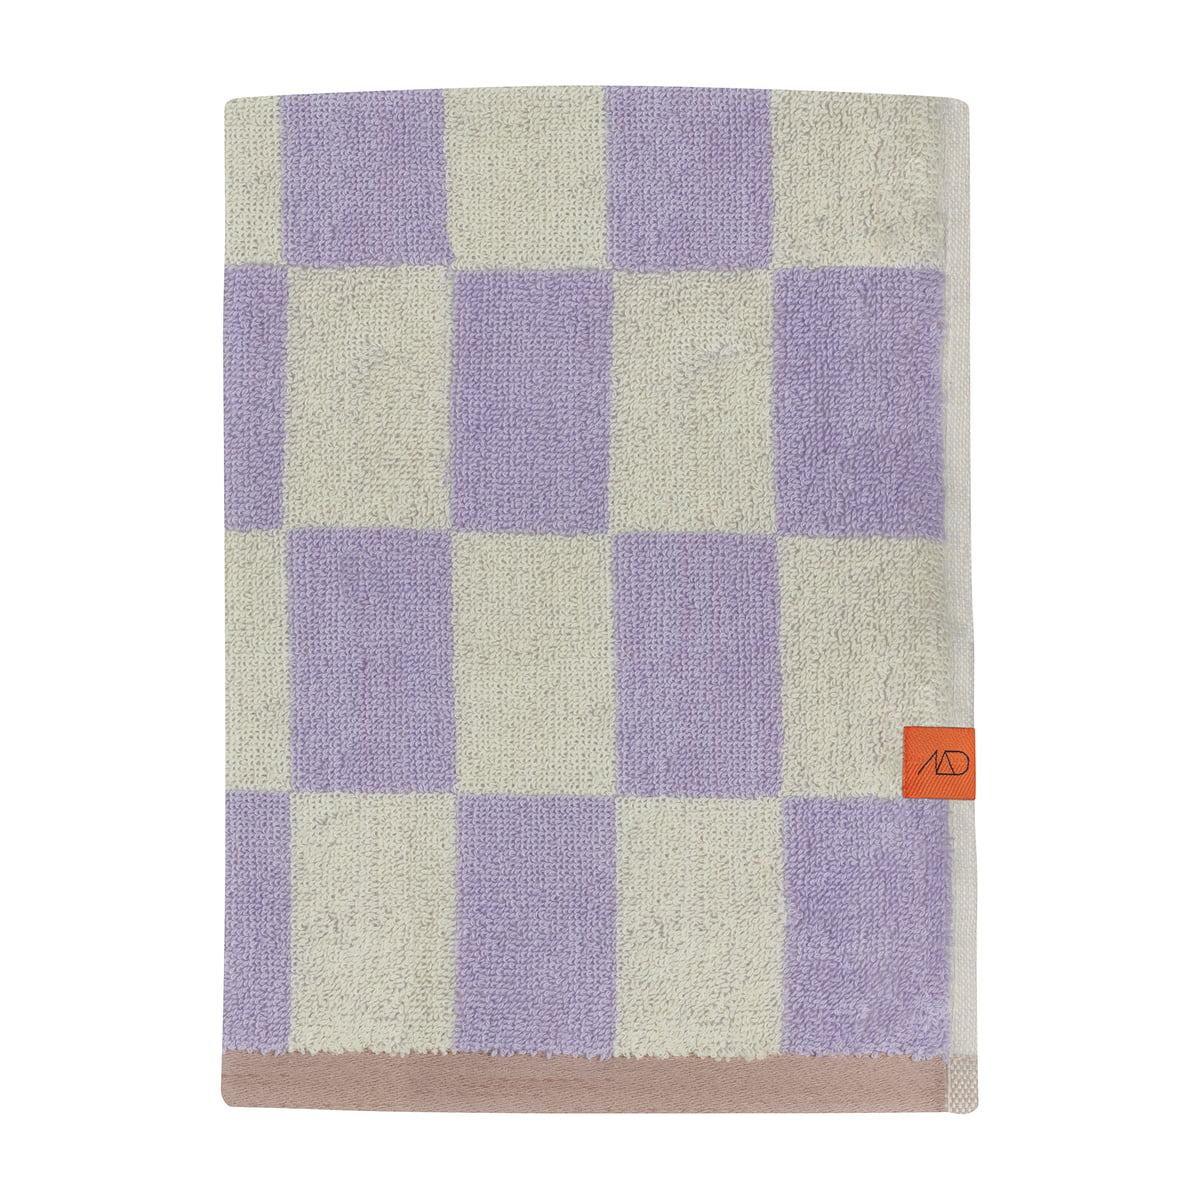 mette ditmer - retro serviette de bain, 70 cm x 133 cm, lilas